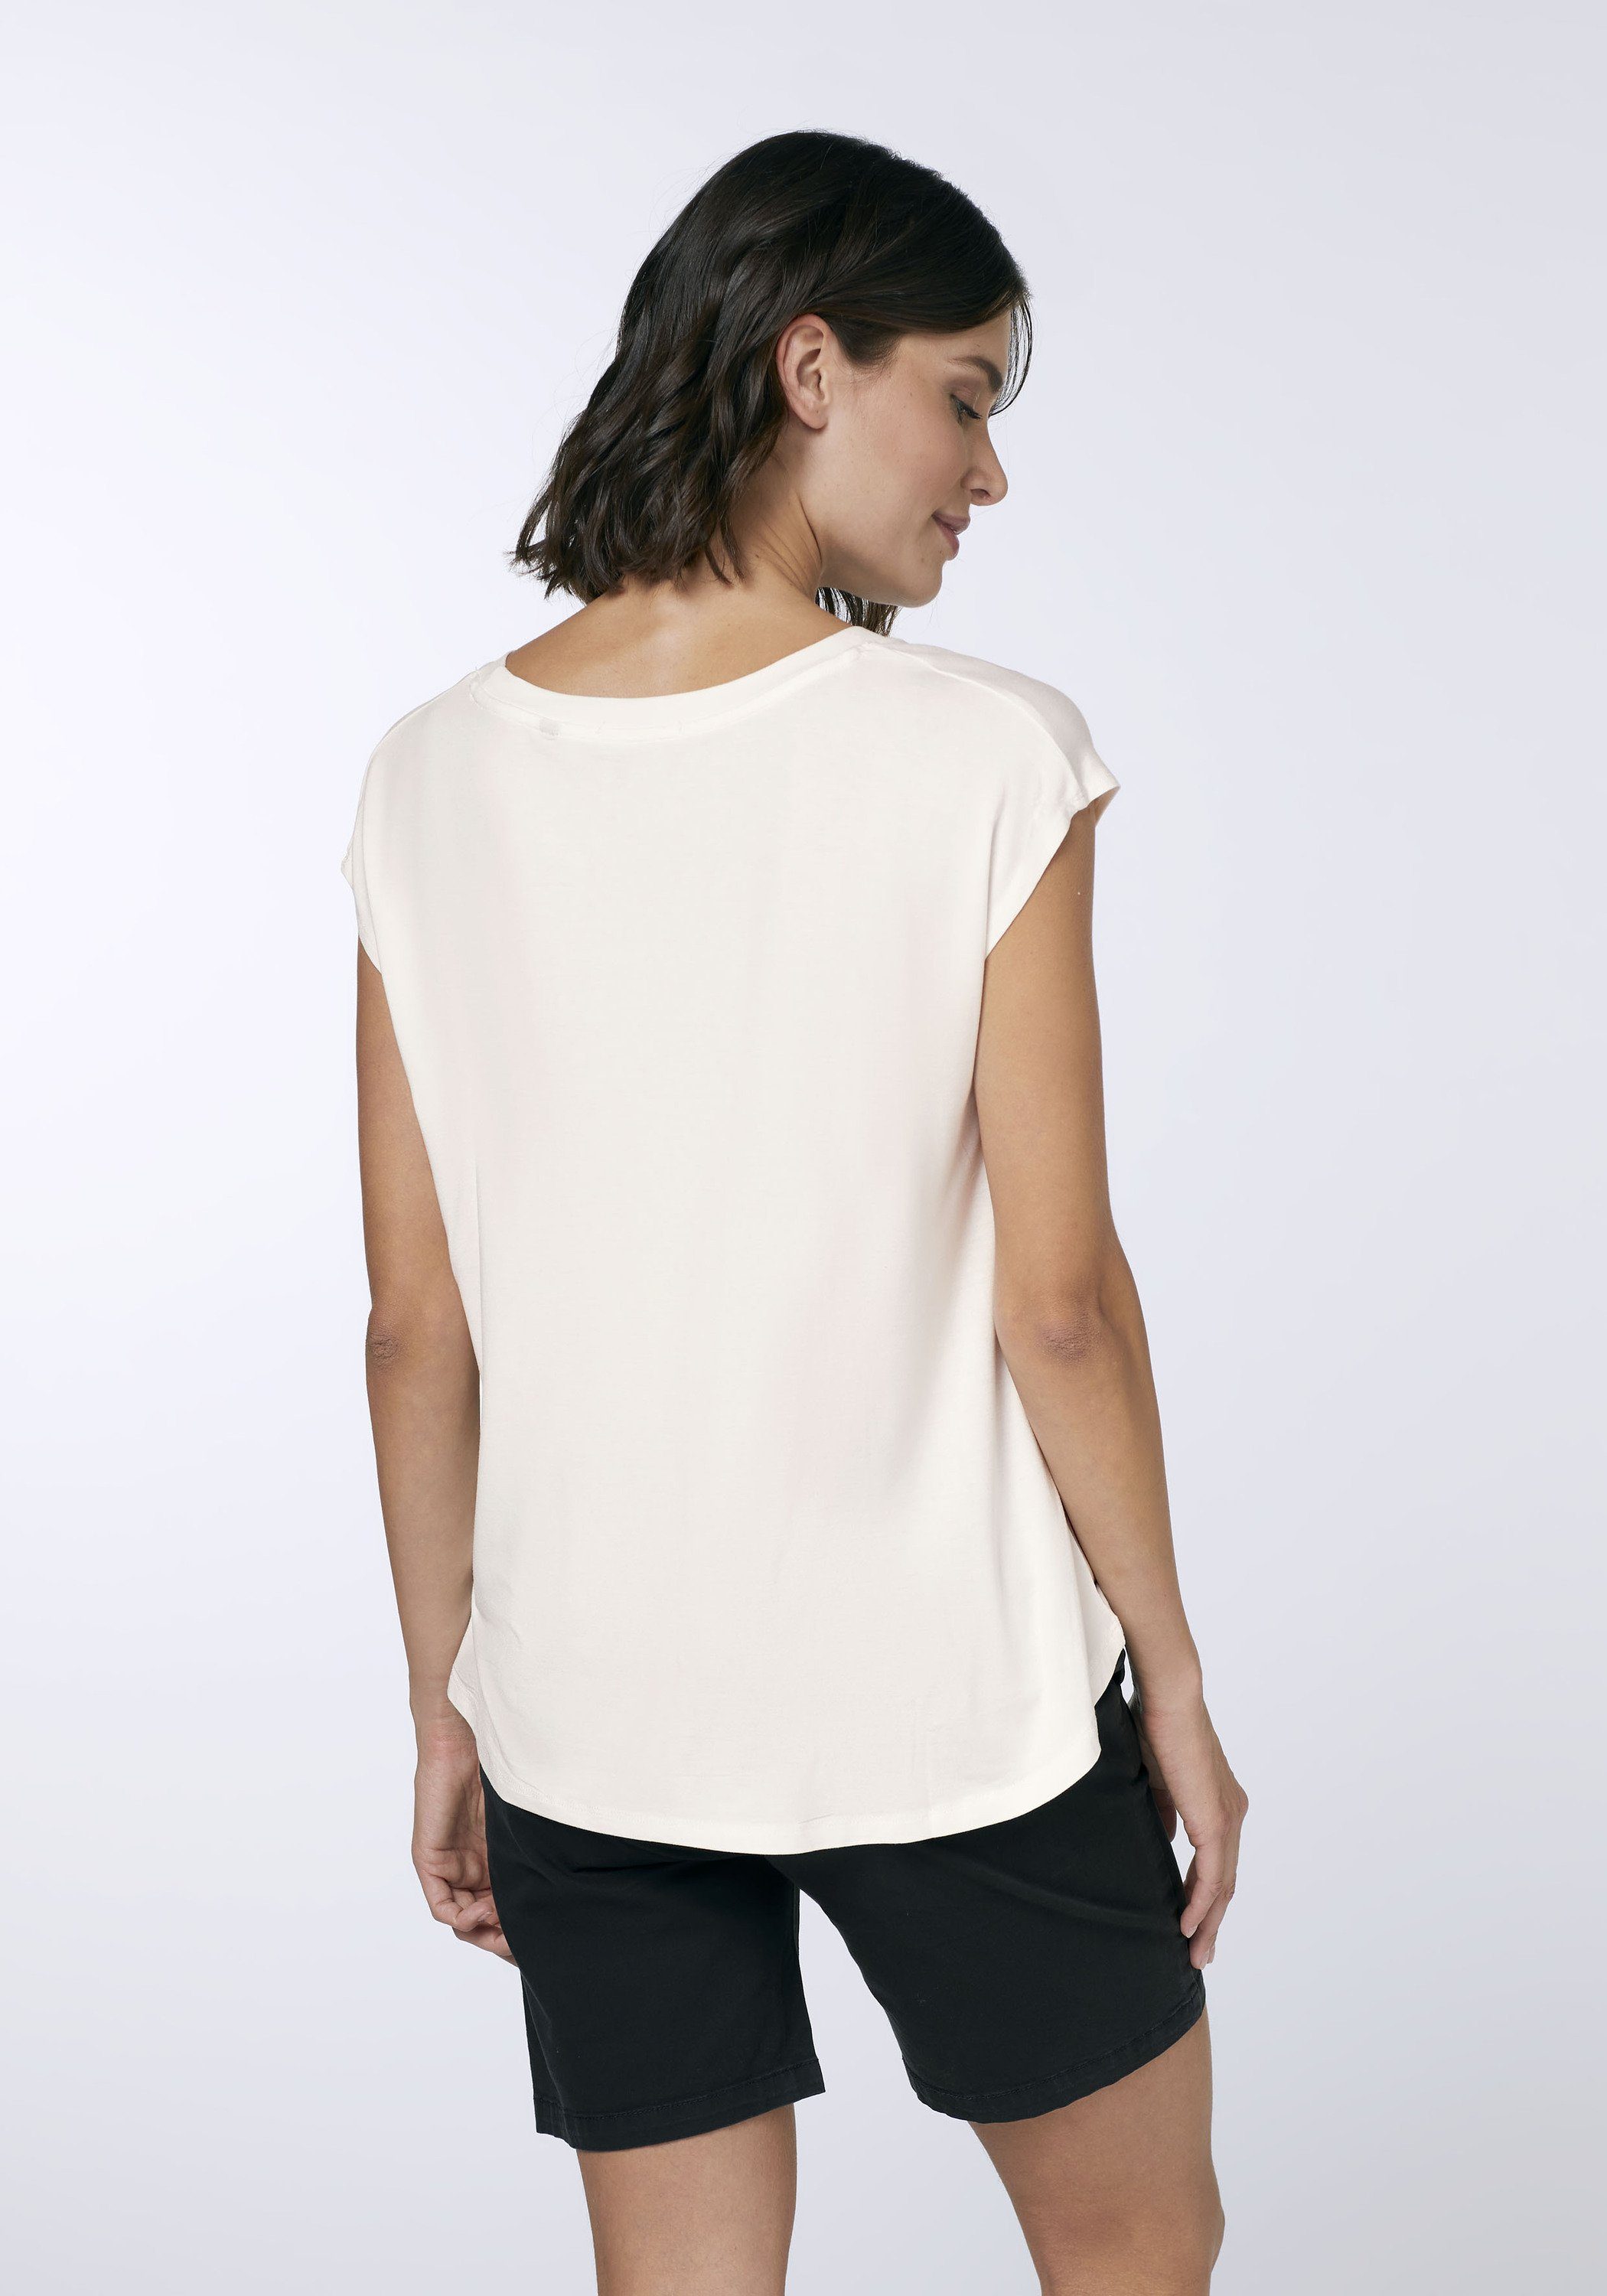 Star mit 1 Chiemsee T-Shirt Labelprint Print-Shirt aus Viskose-Elasthanmix White